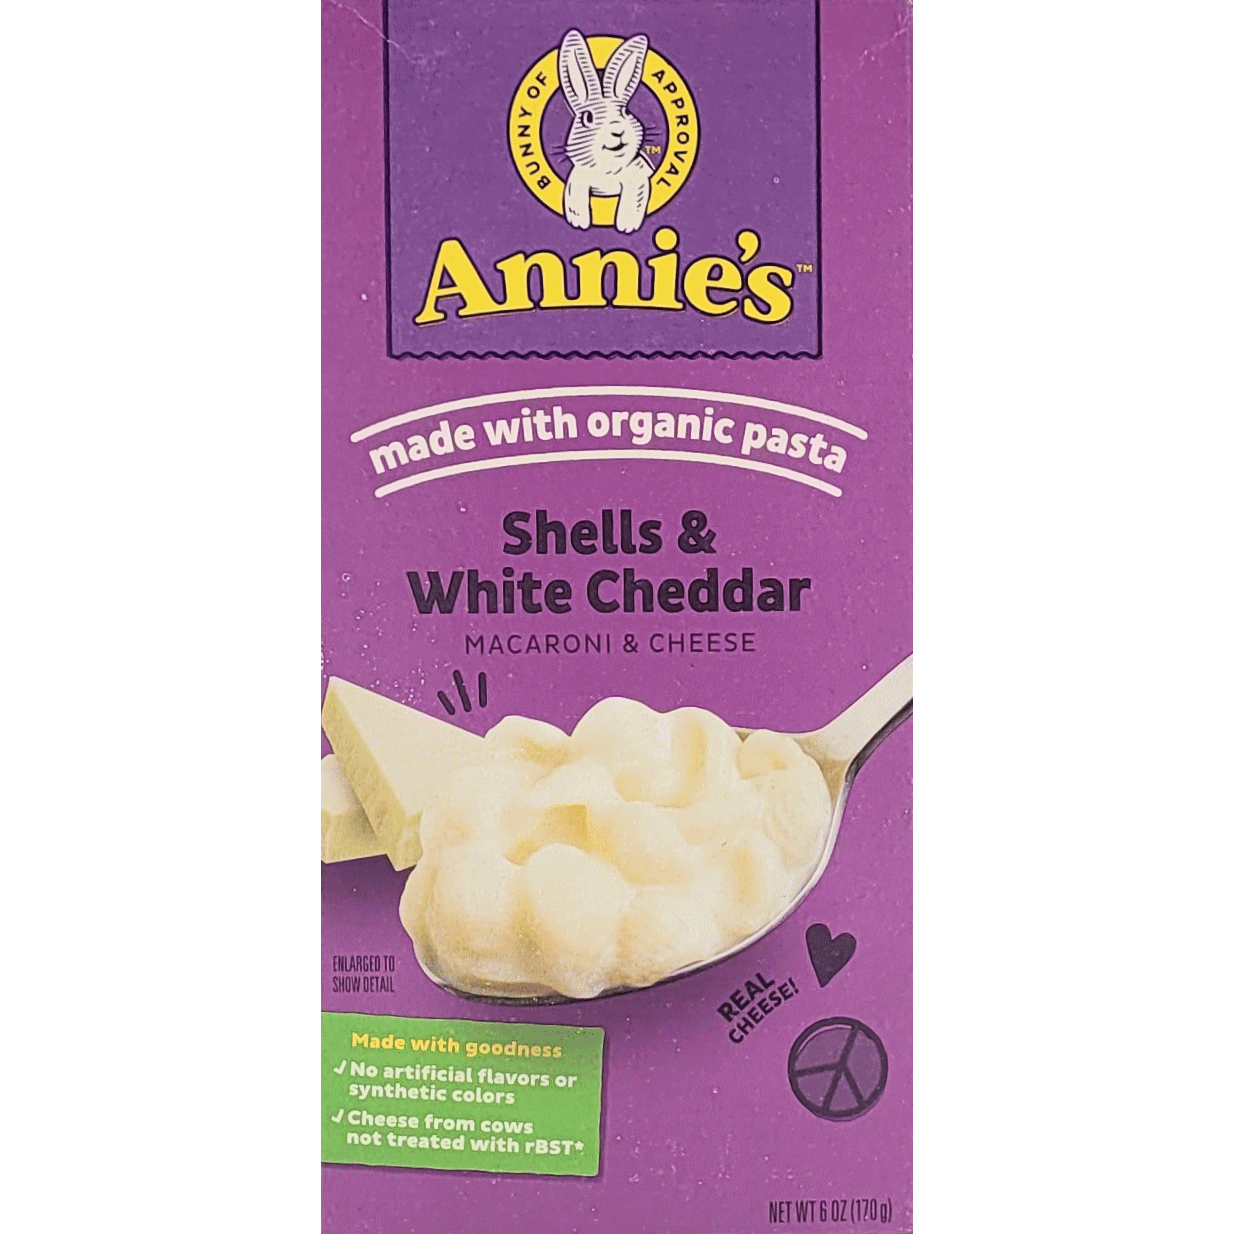 Annie's White Cheddar Shells 6oz